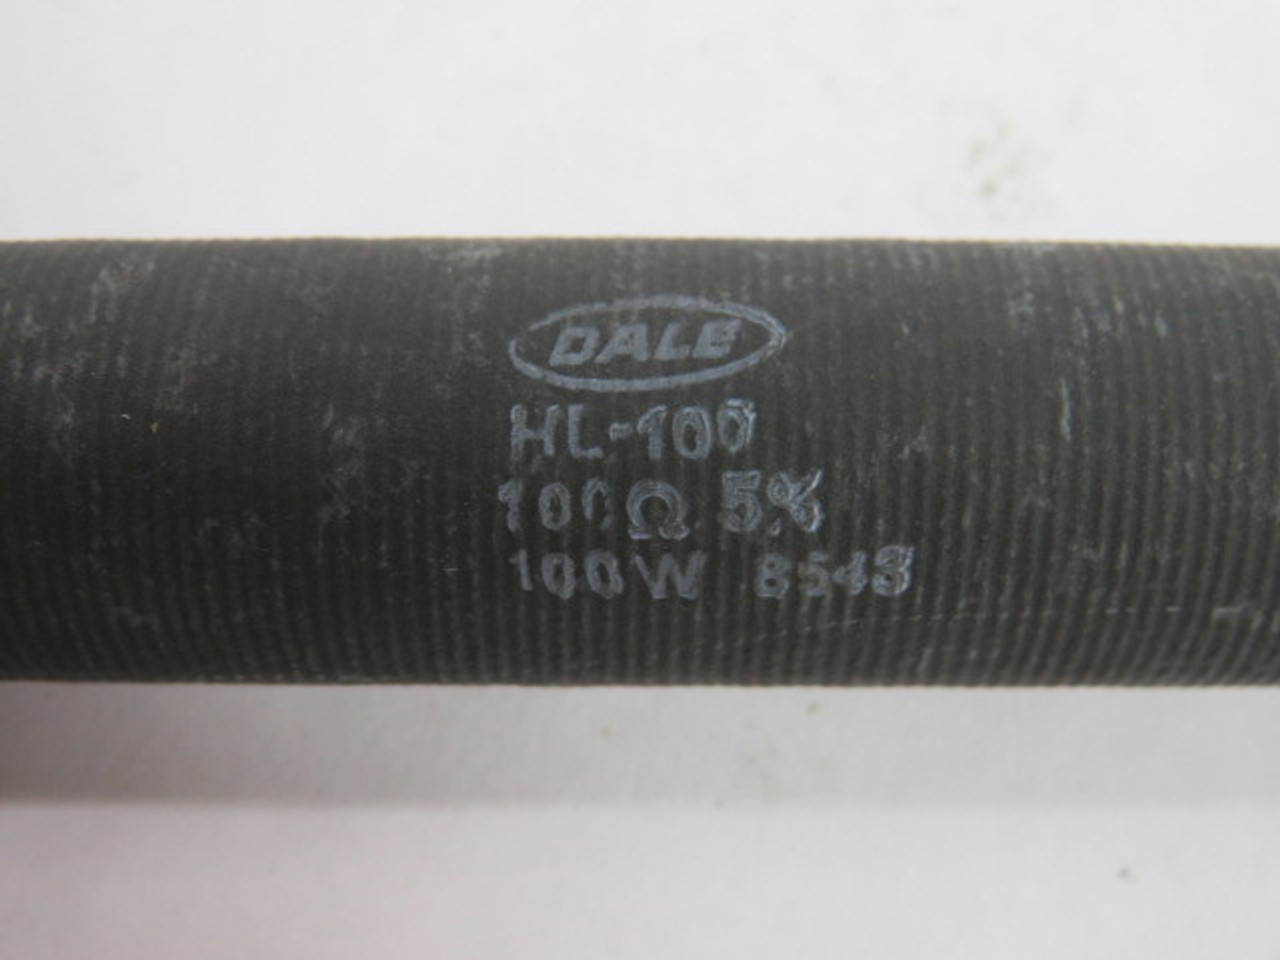 Dale HL-100 Wirewound Resistor 100 Ohm 100W USED